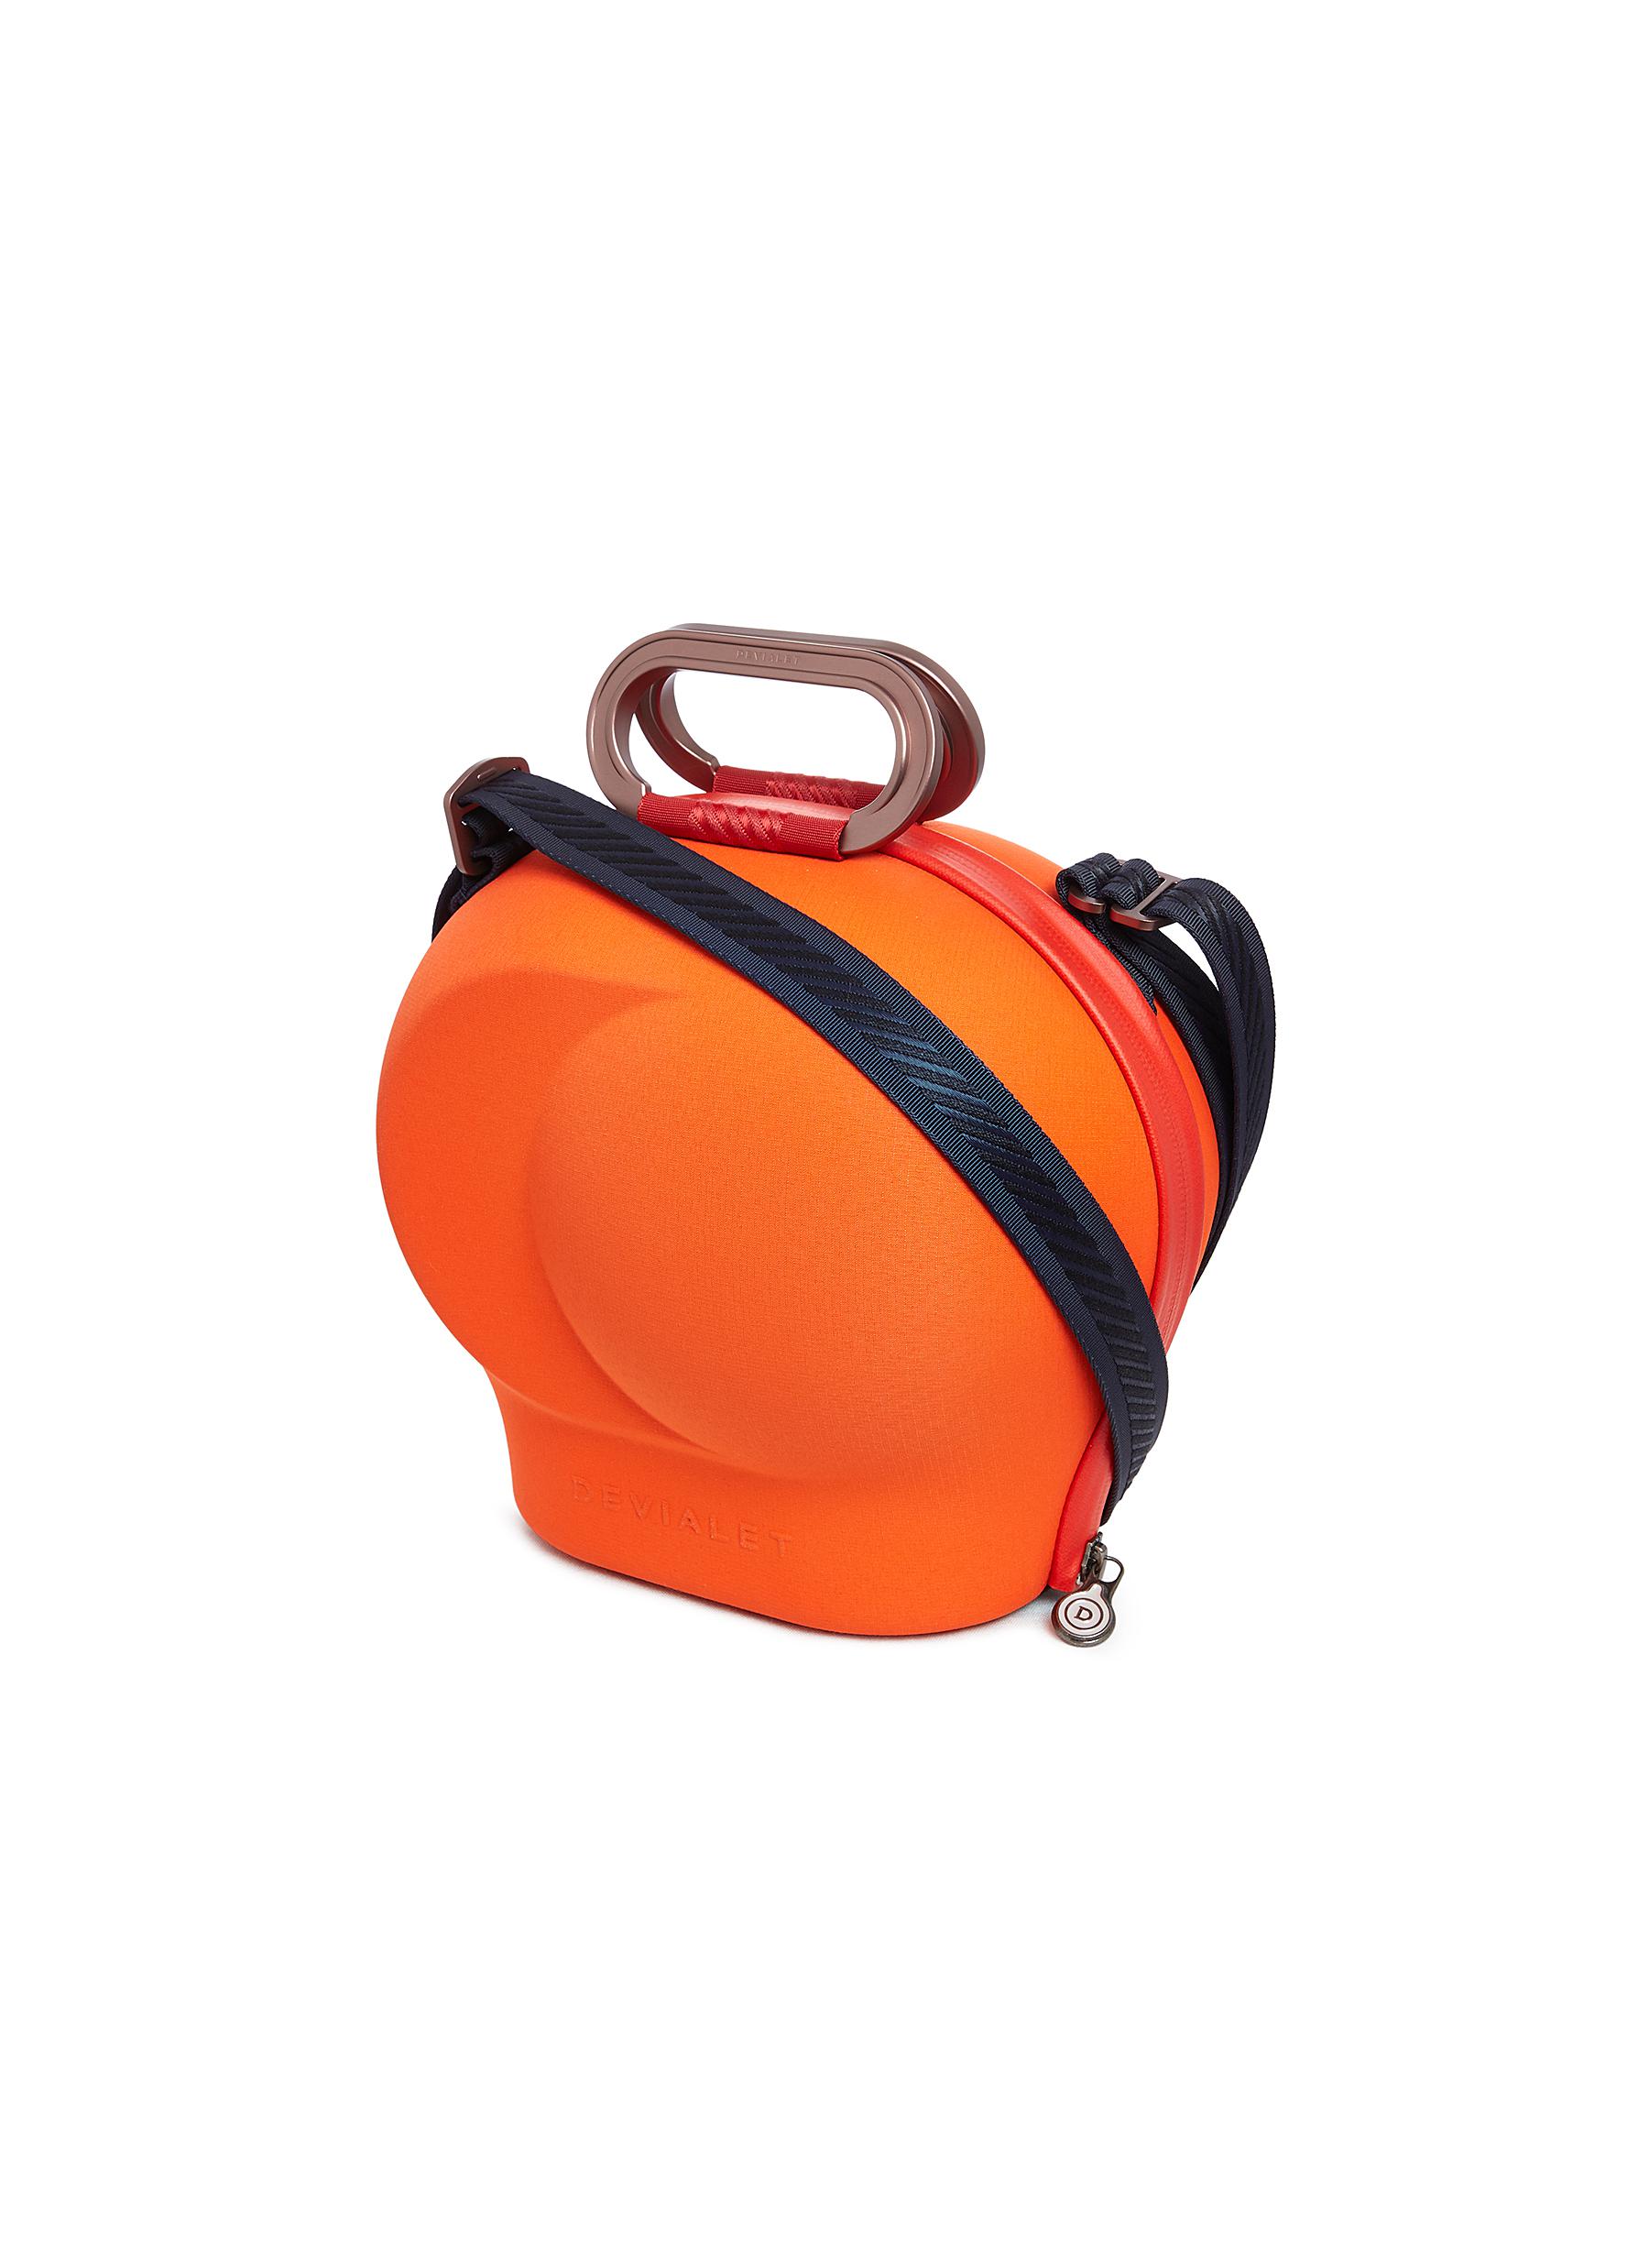 Phantom Reactor Cocoon carrying case - Orange